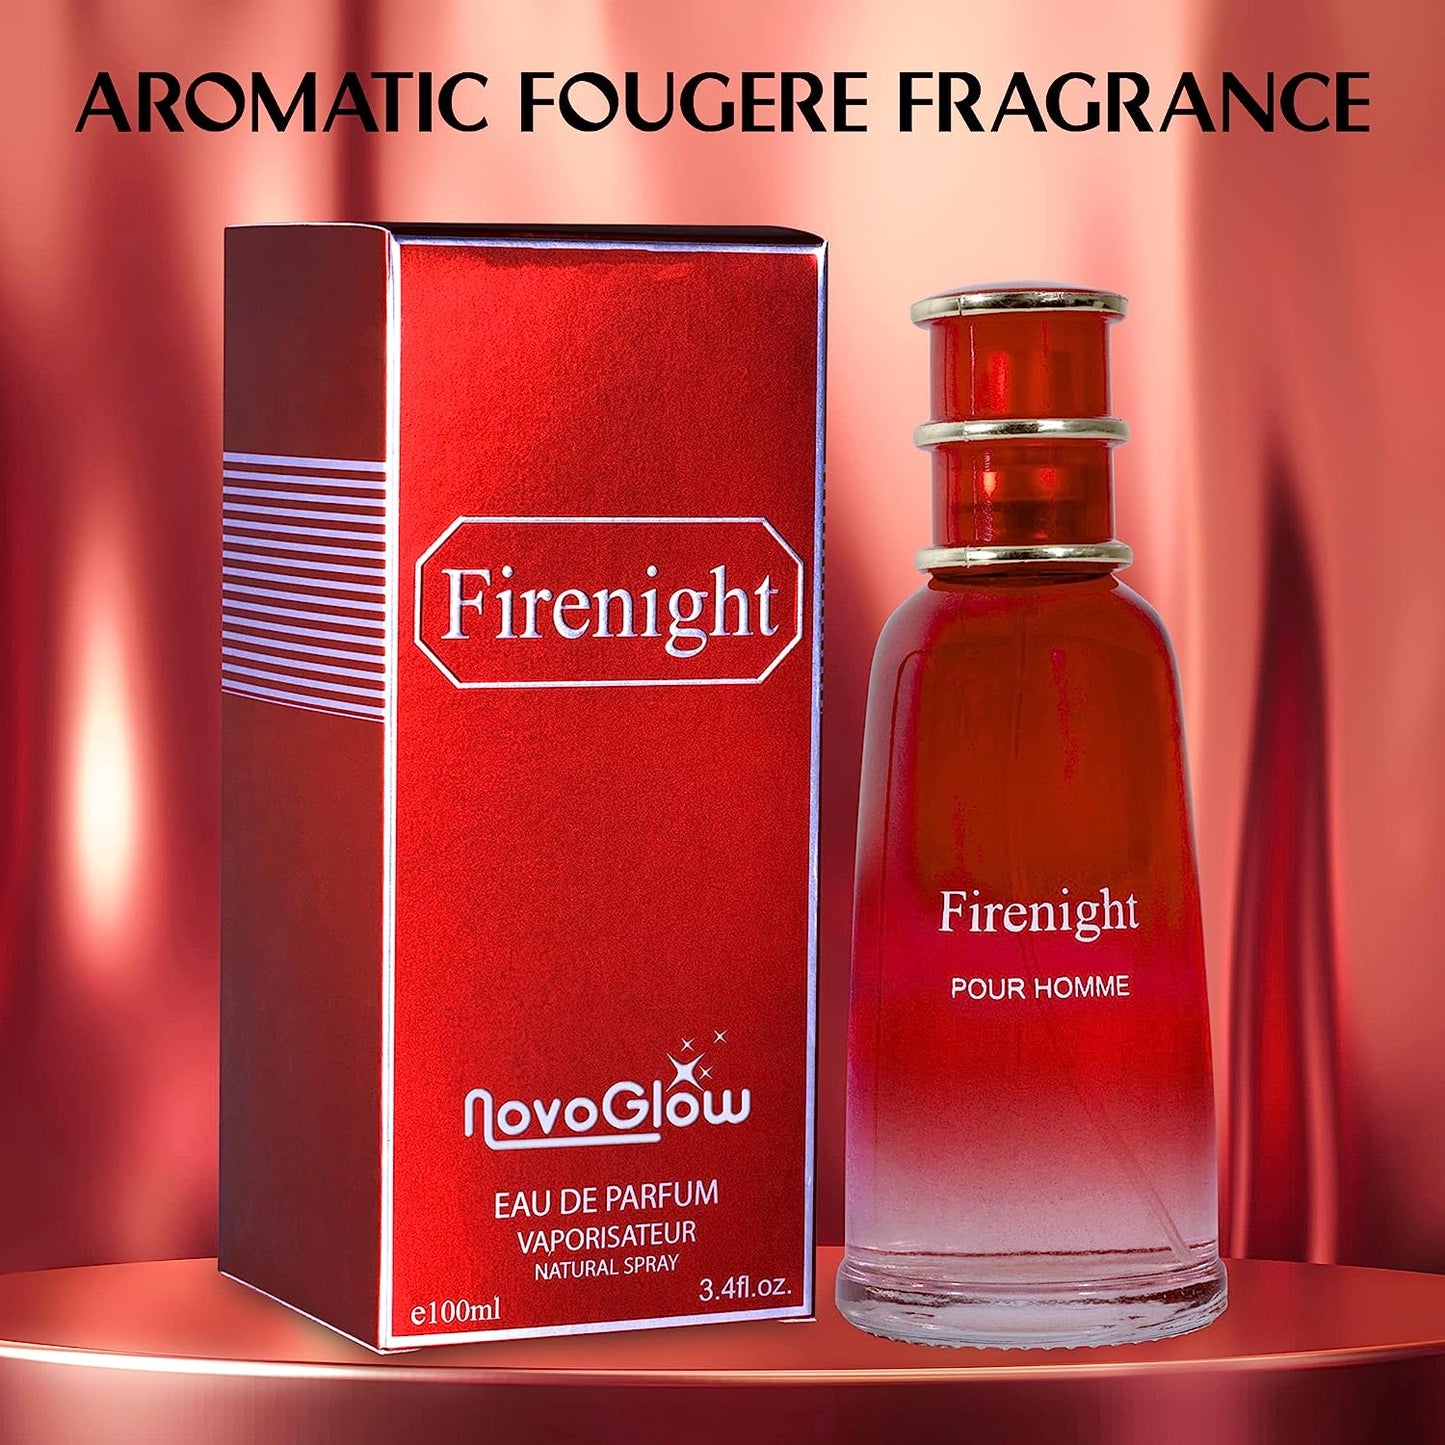 NovoGlow Firenight Pour Homme- Eau De Parfum Spray Perfume, Fragrance For Men- Daywear, Casual Daily Cologne 3.4 Oz Bottle- Ideal EDT Beauty Gift for Birthday, Anniversary